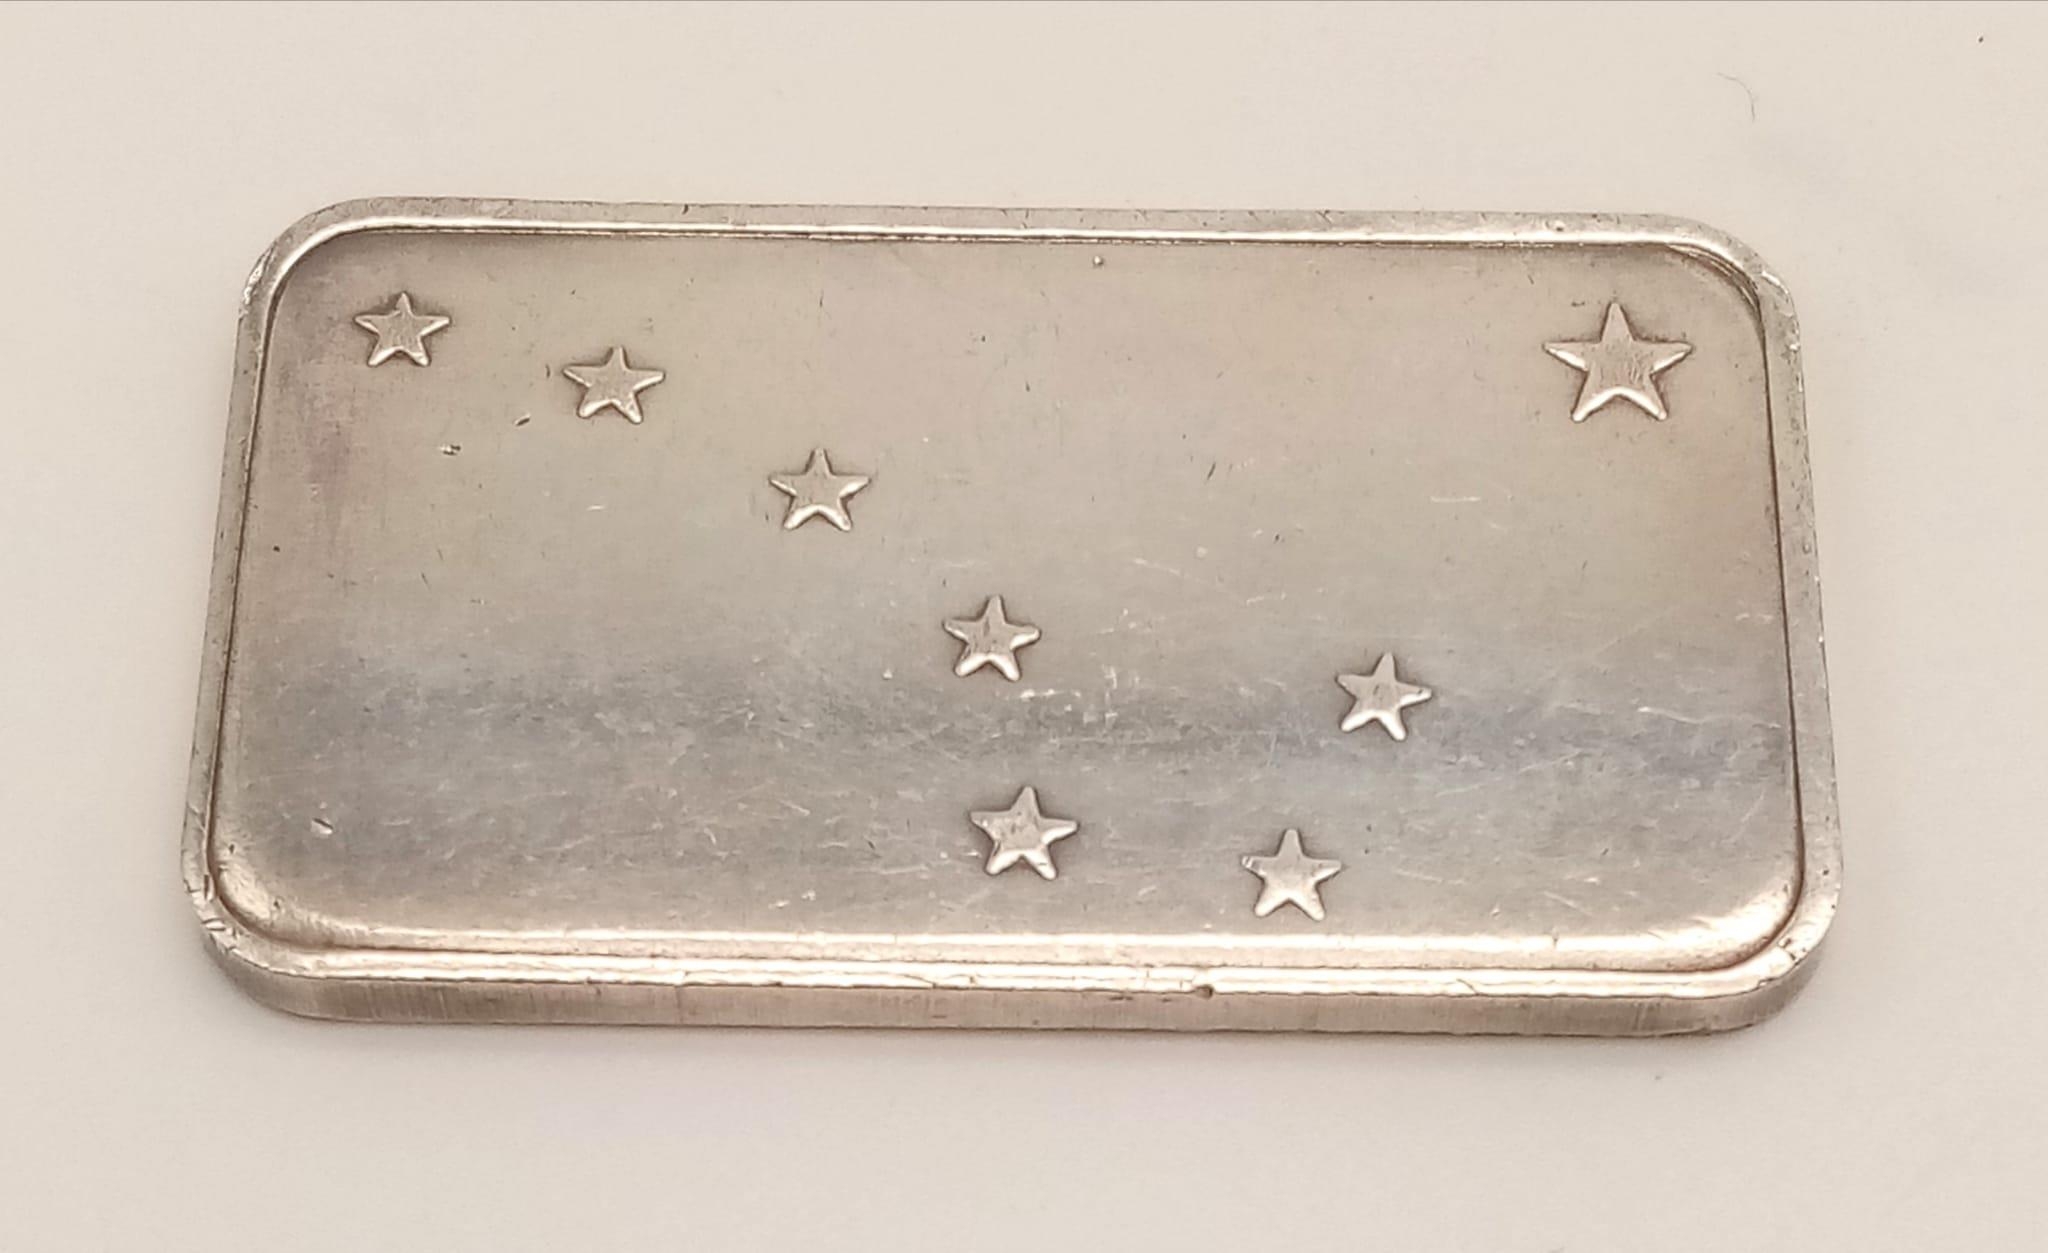 An Oxford Alaska Silver 1oz Bar - .999 silver. 31.4g 4.5 x 2.5cm. - Image 2 of 3